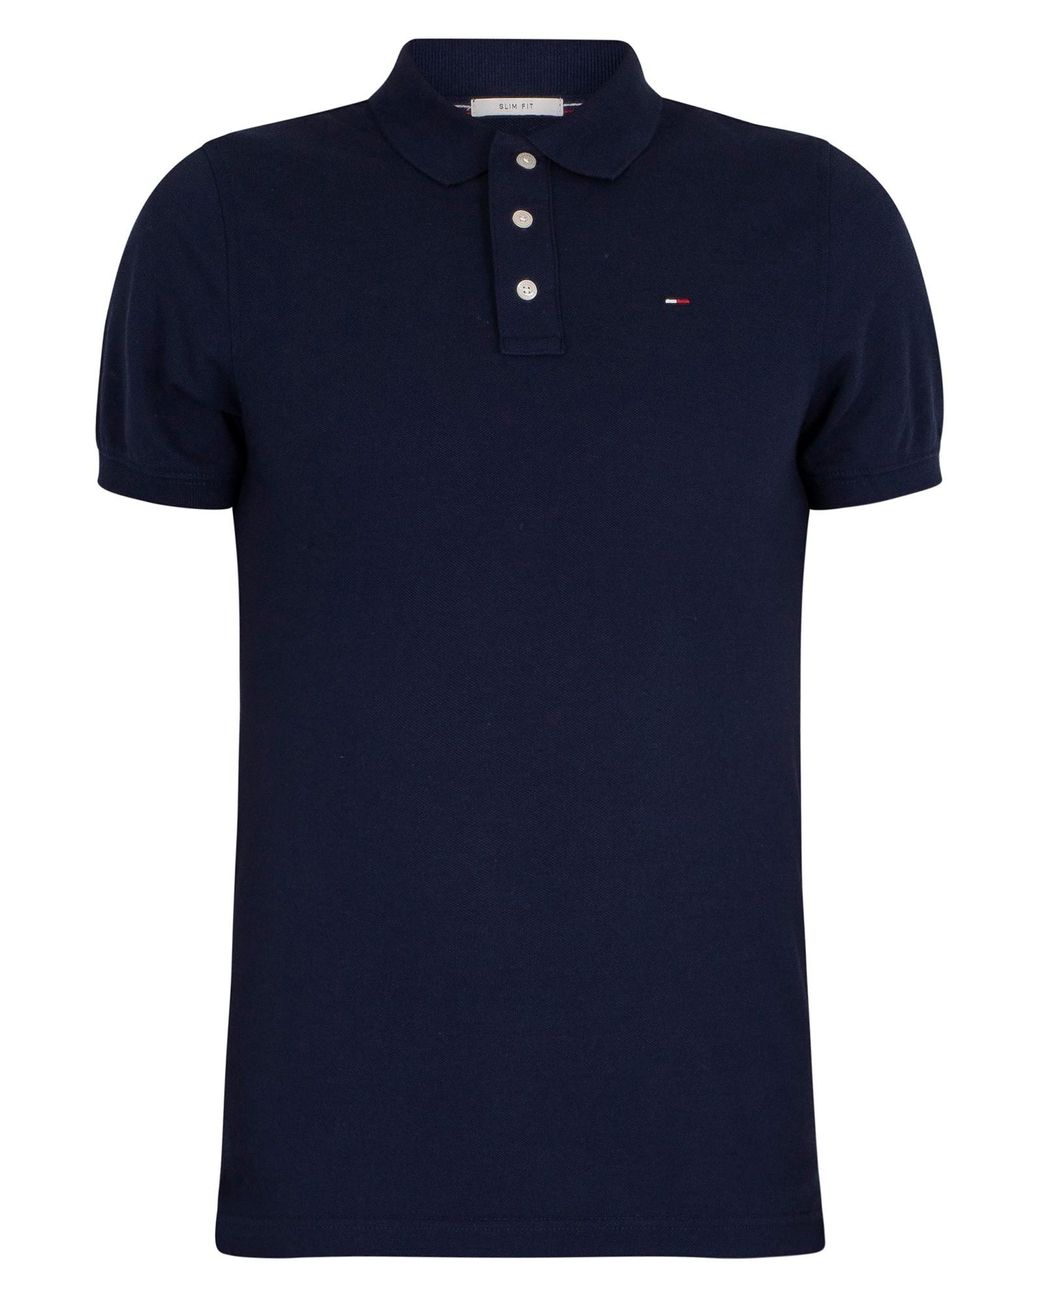 Tommy Hilfiger Denim Original Fine Slim Polo Shirt in Black Iris (Blue) for  Men - Lyst